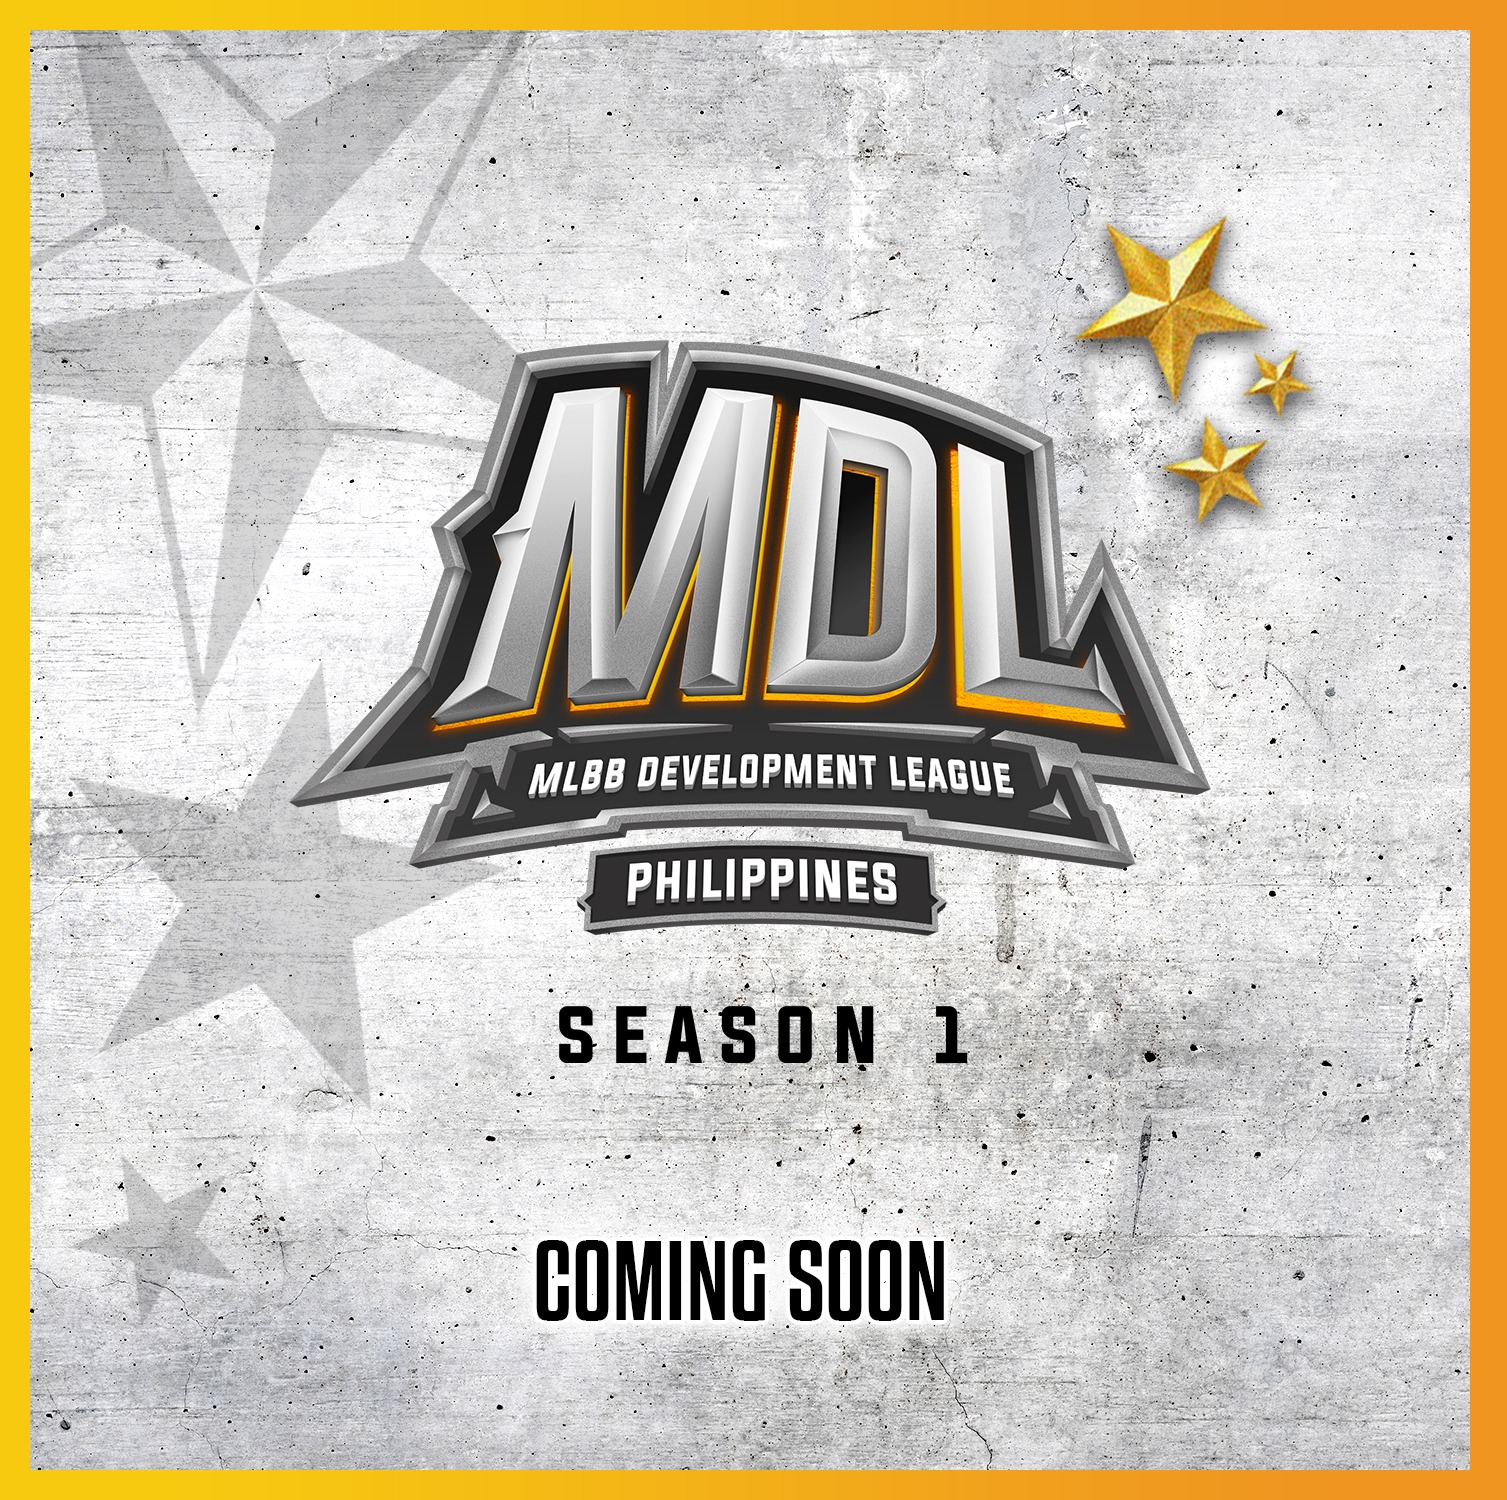 MDL PH Season 1 Akan Mulai Bergulir pada  15 Februari 2023